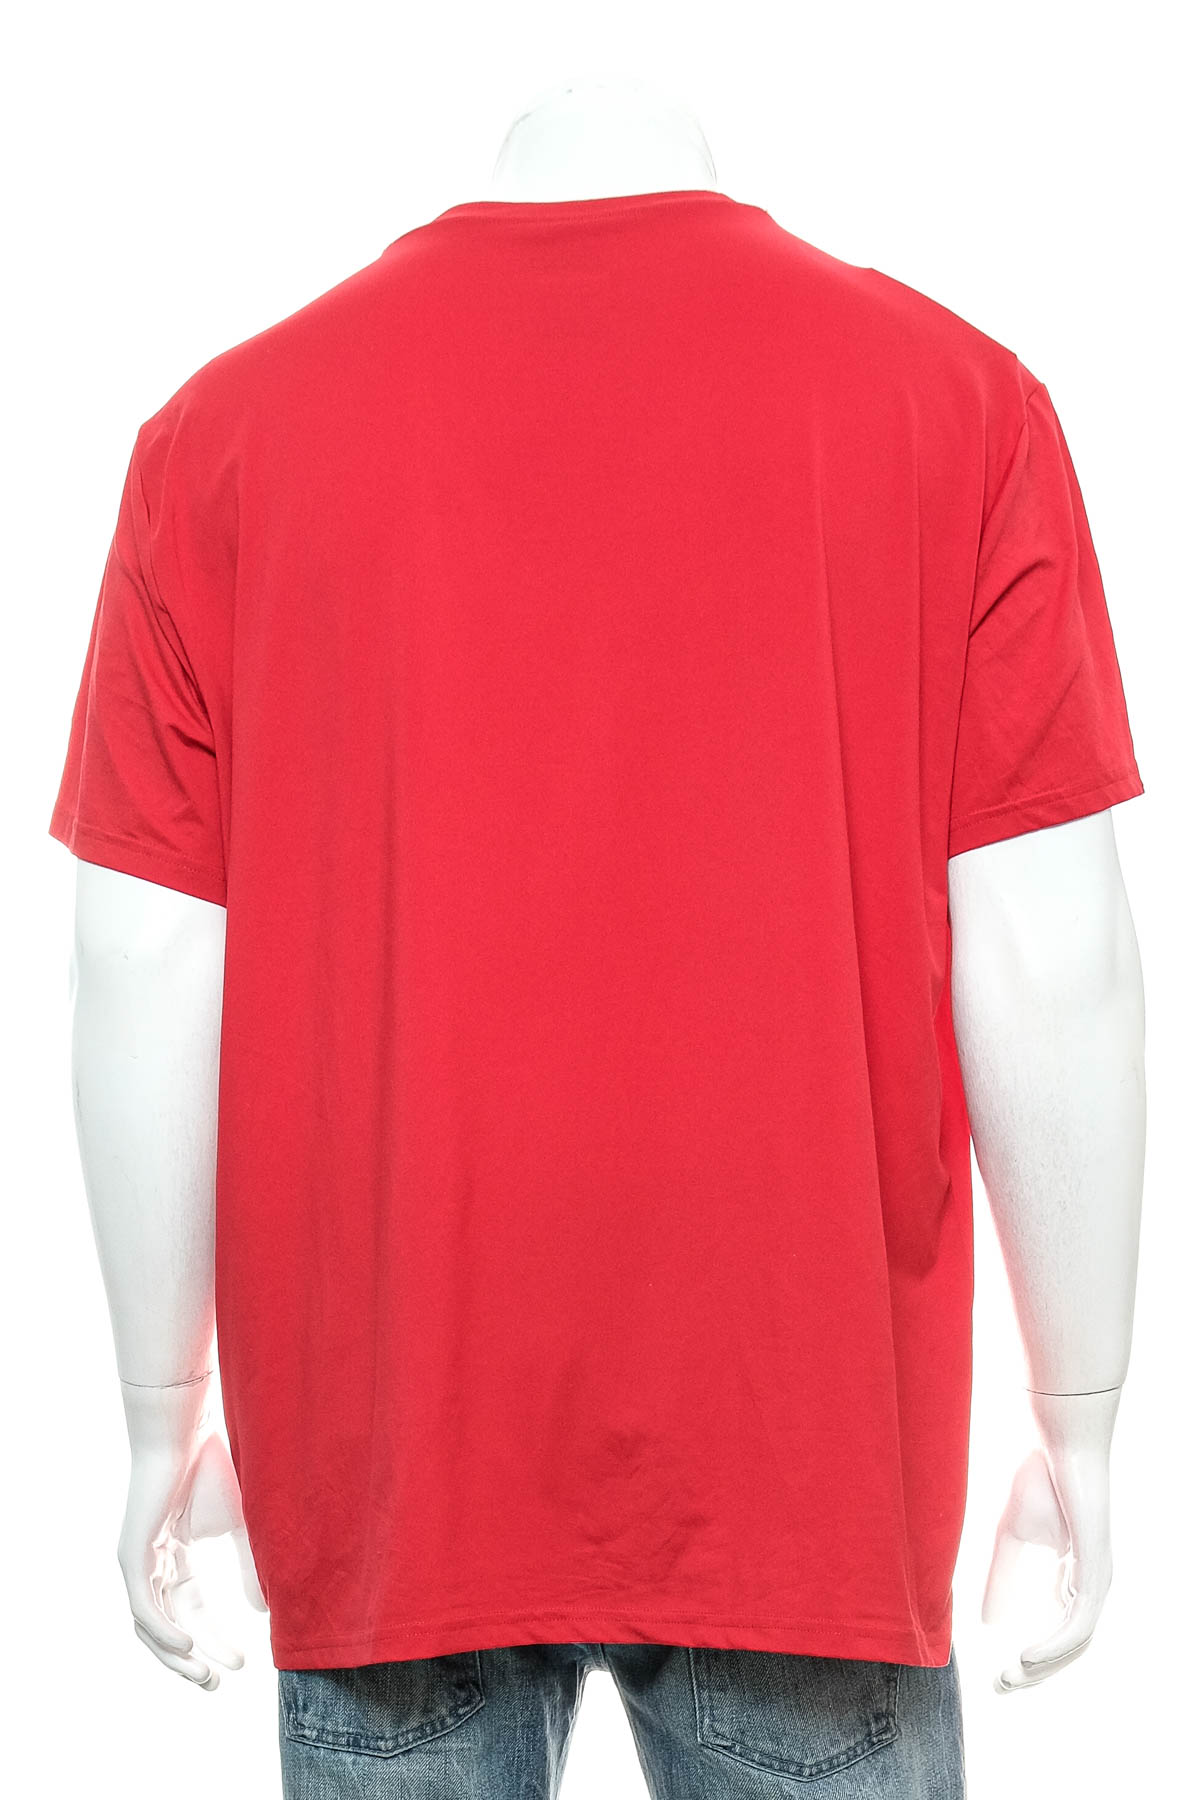 Men's T-shirt - Izod - 1